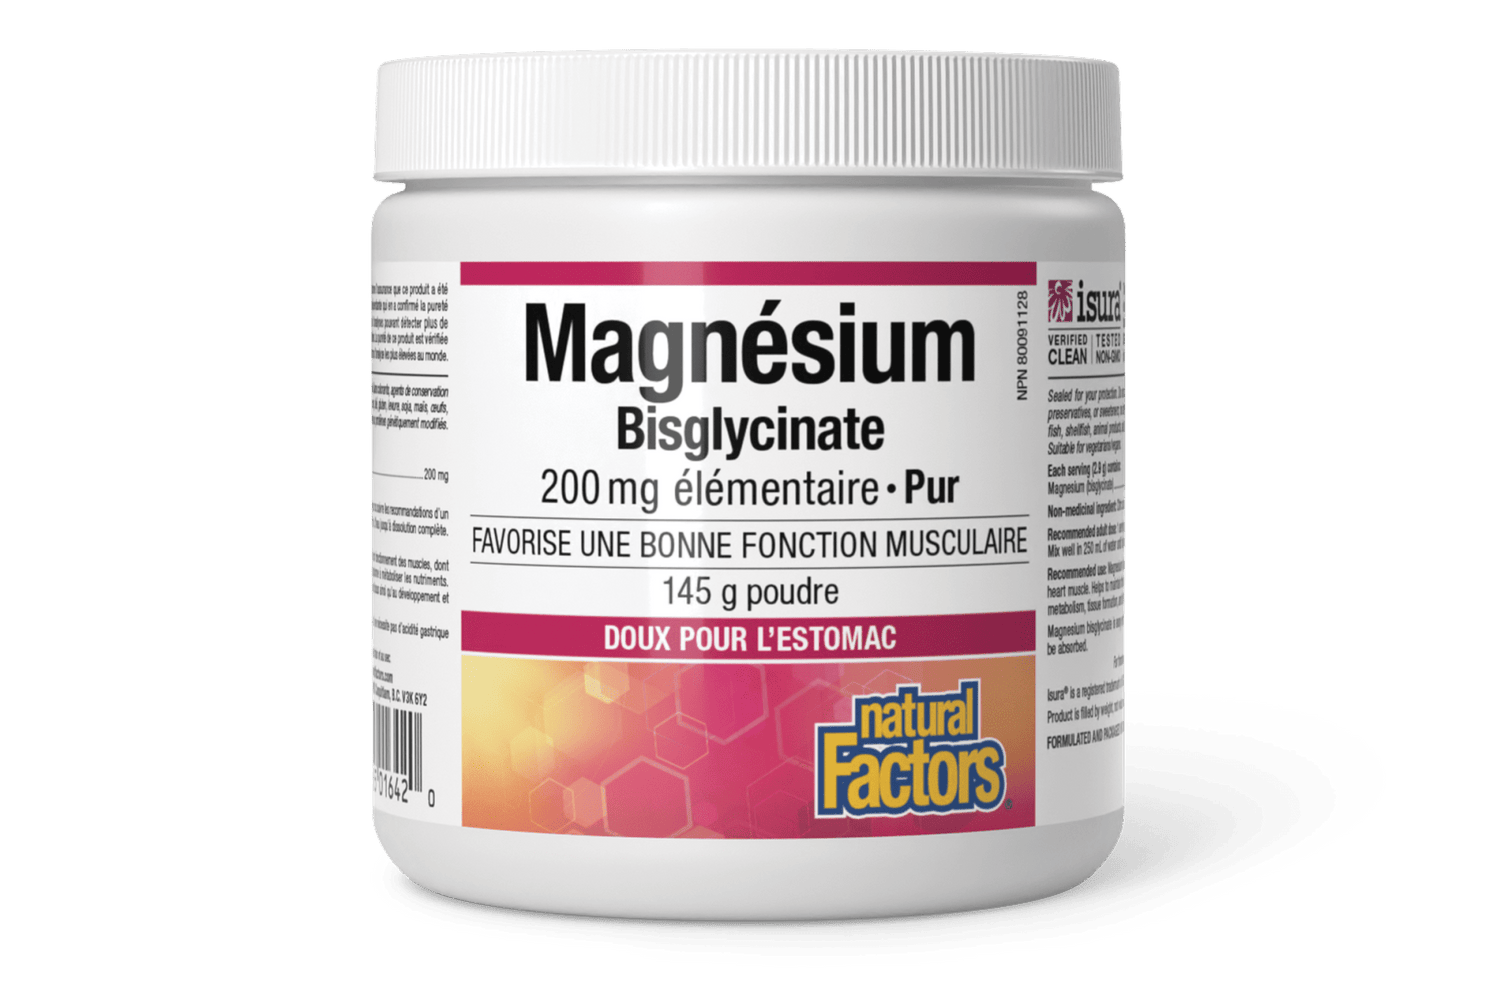 Bisglycinate de magnésium pur 200 mg, Natural Factors|v|image|1642